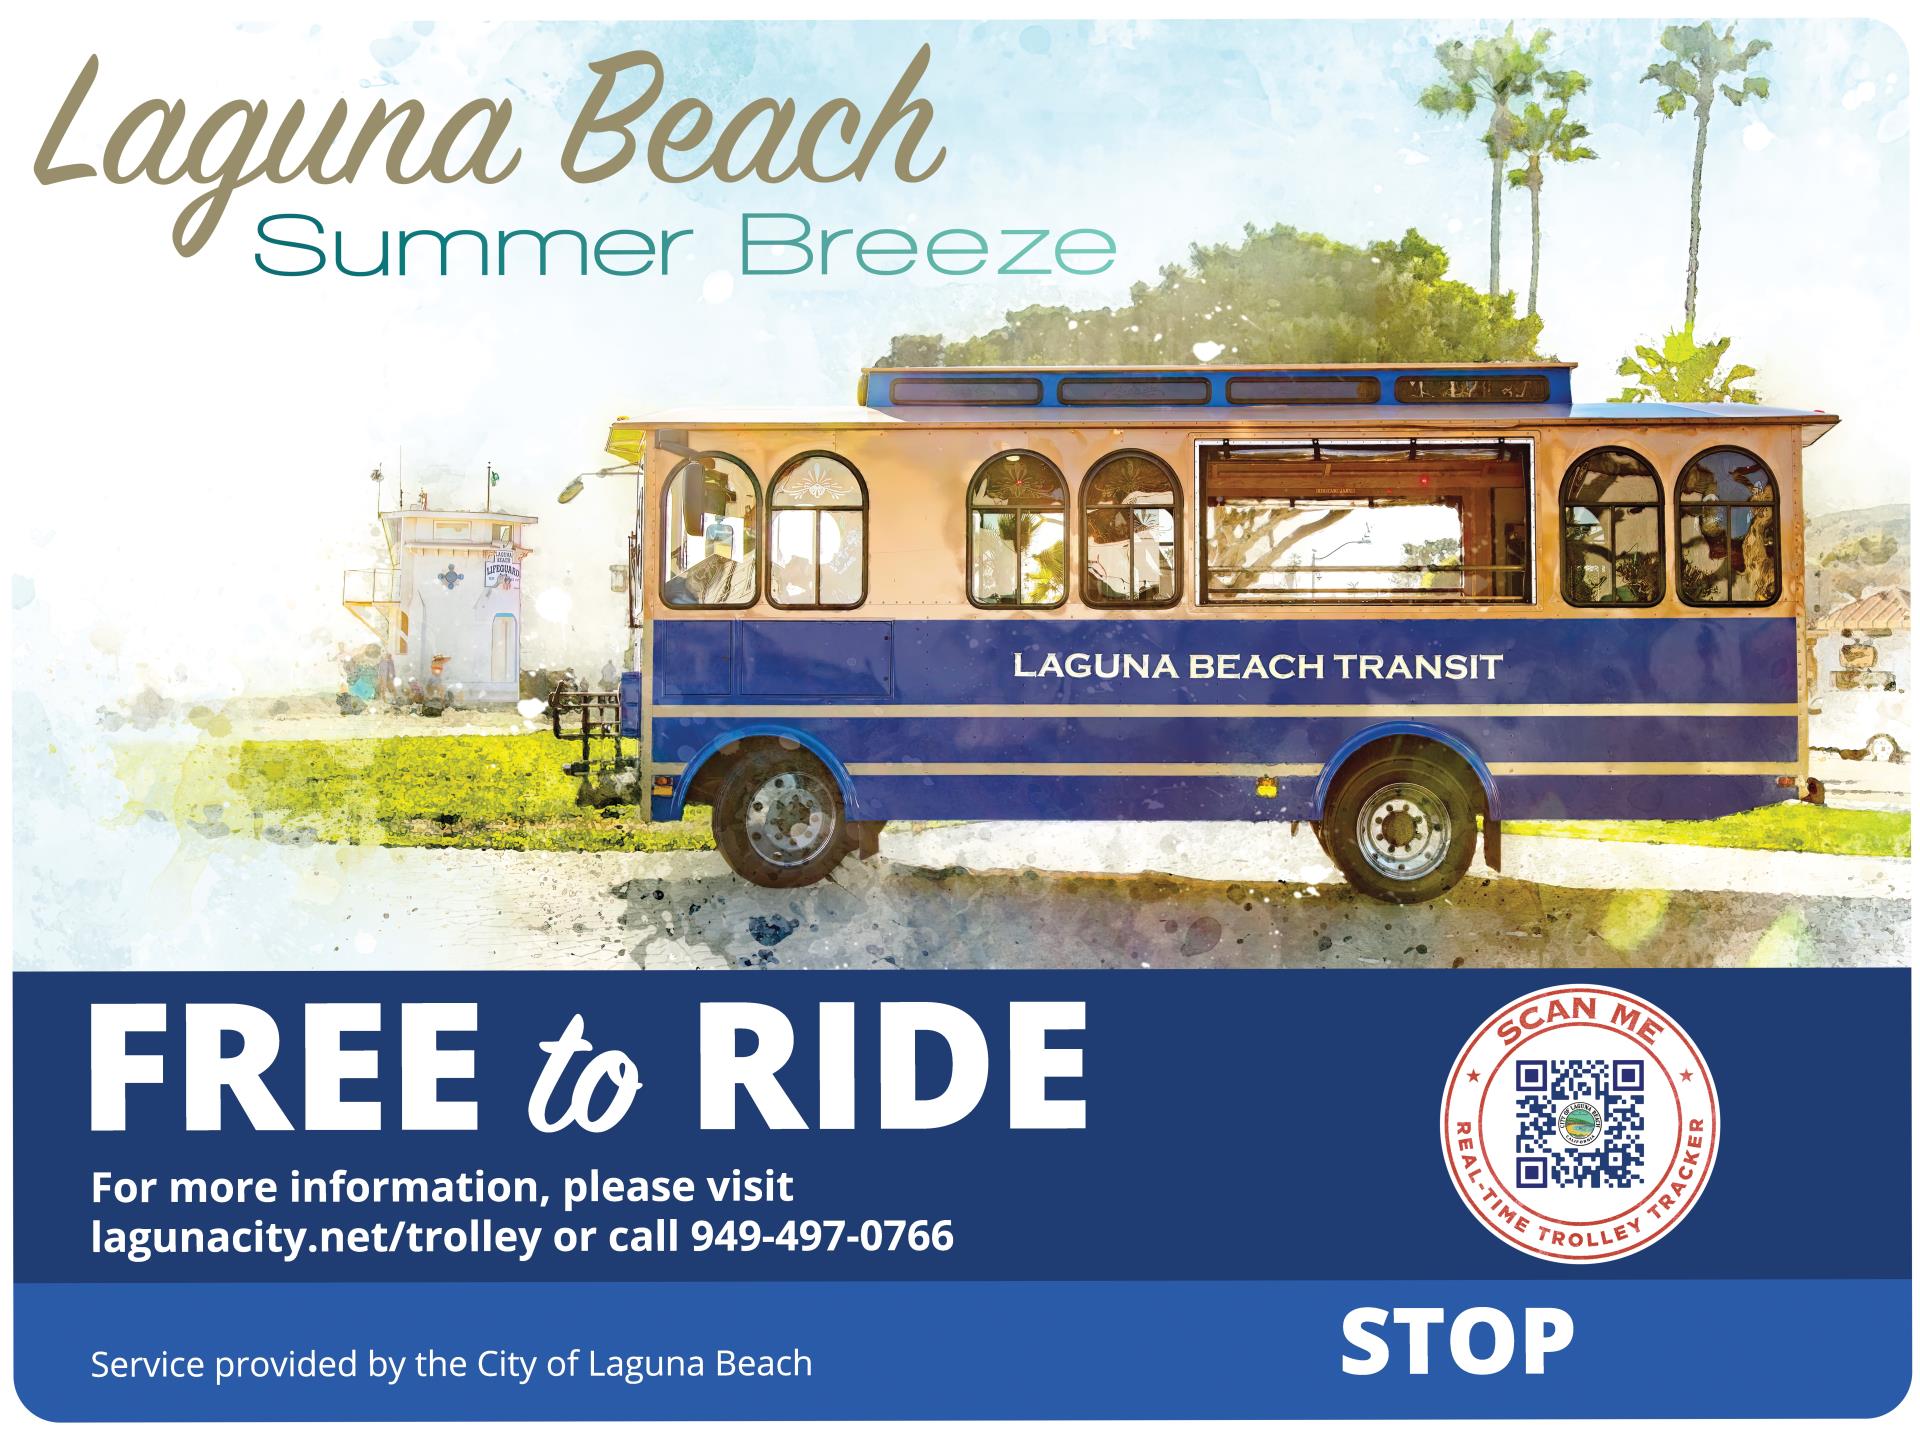 Visit-Laguna-Beach-Summer-Breeze-Signage